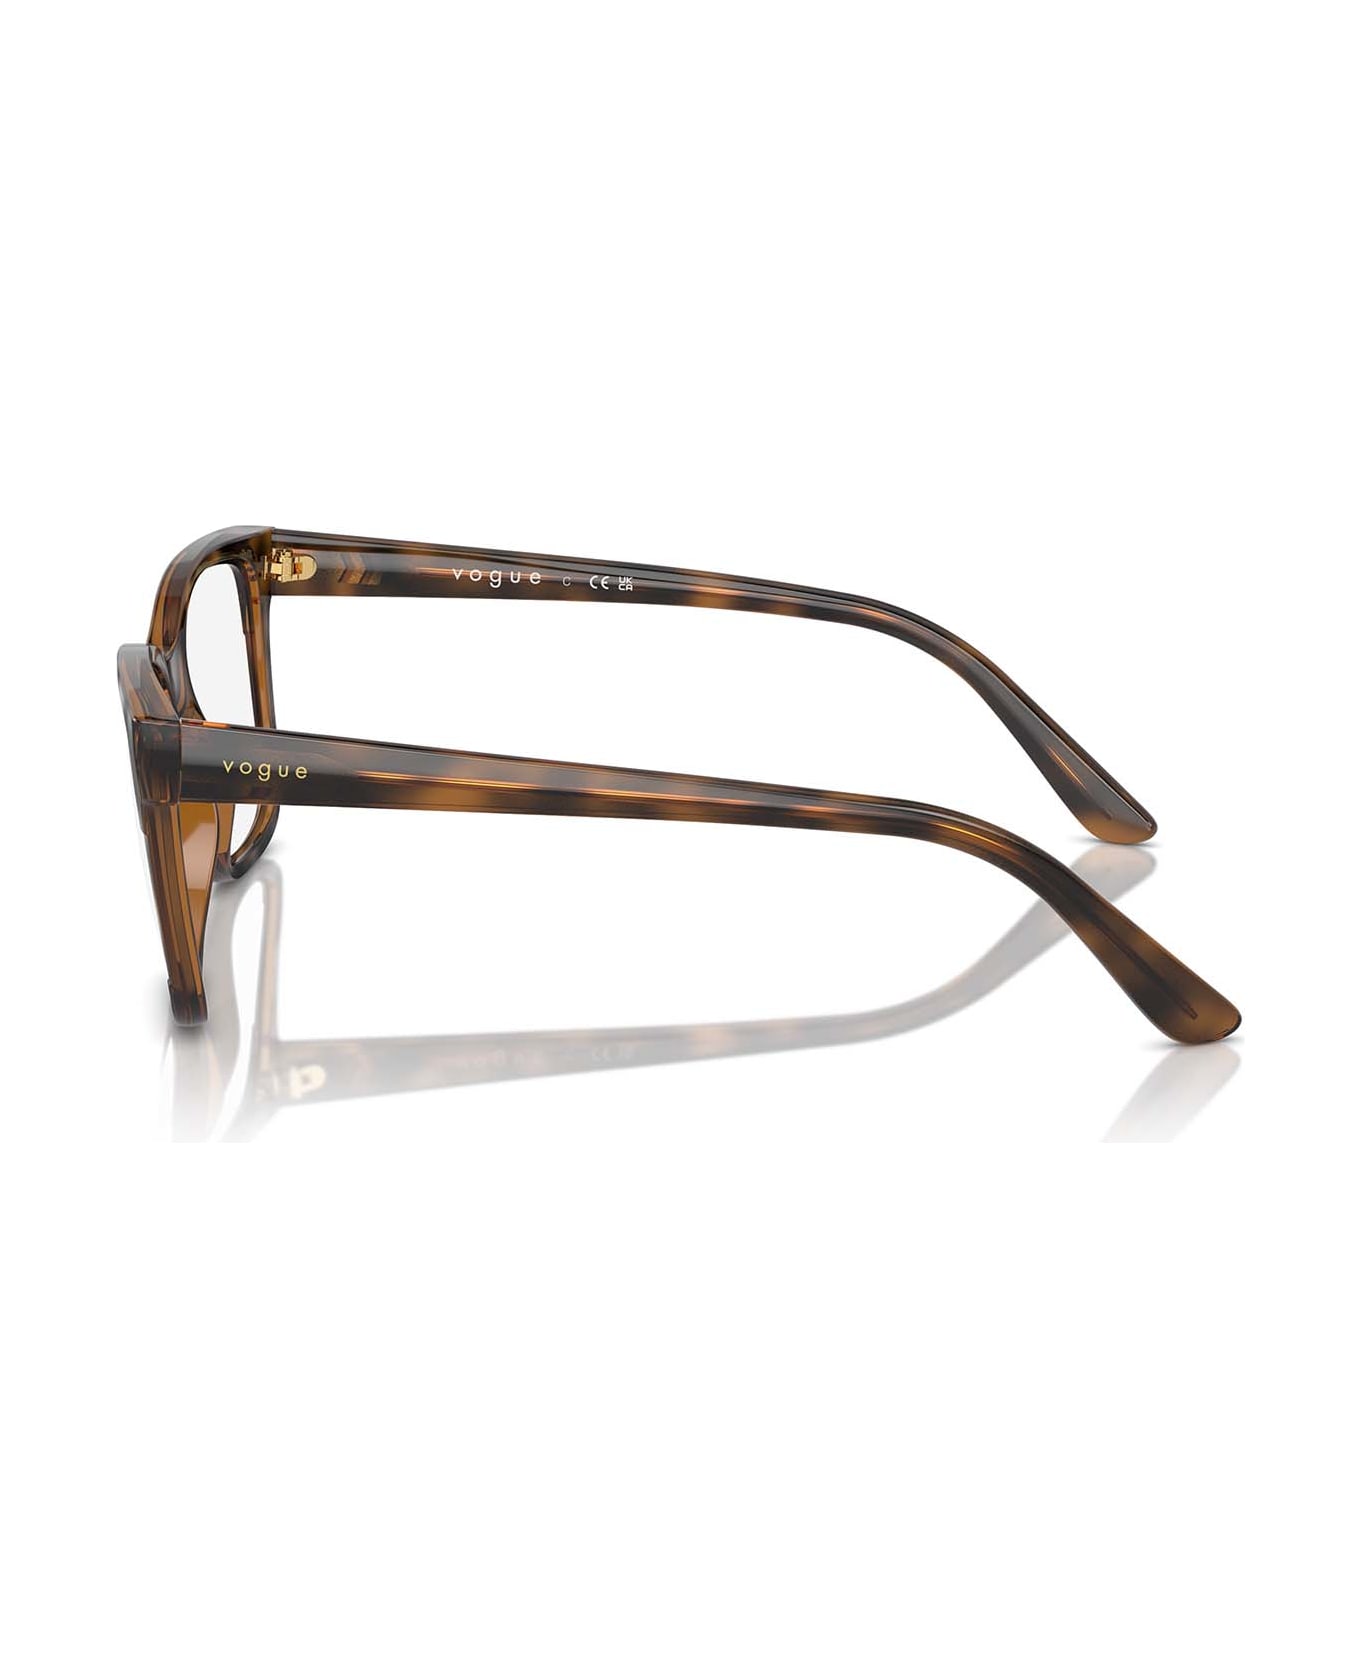 Vogue Eyewear Vo5556 Top Dark Havana / Light Brown Glasses - Top Dark Havana / Light Brown アイウェア